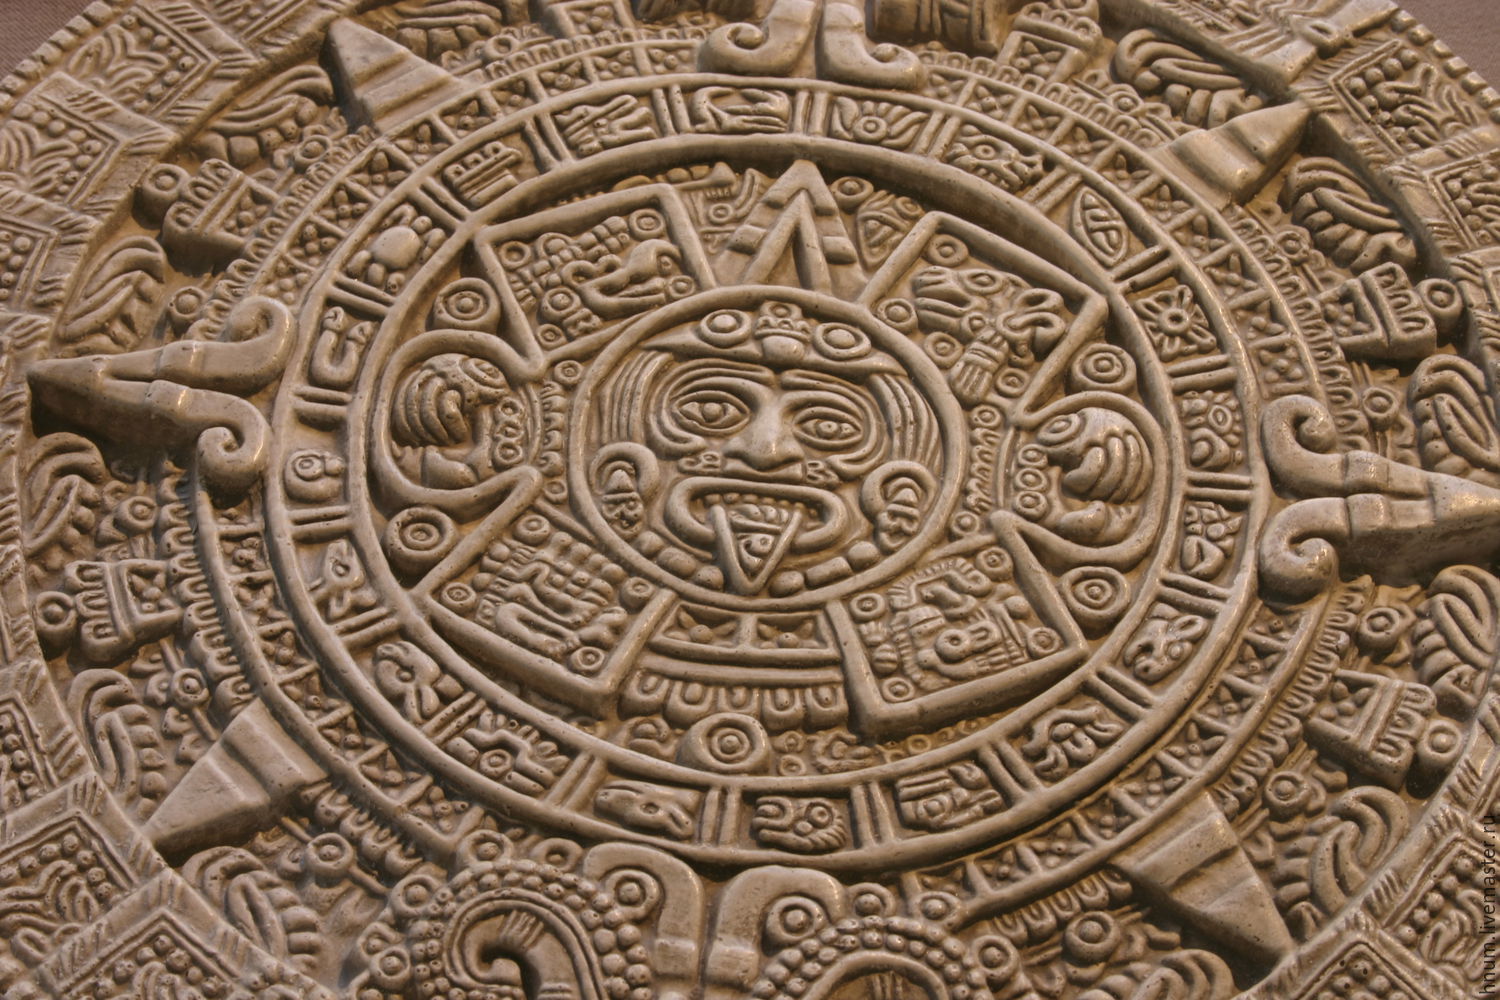 Иллюстрация календарь майя